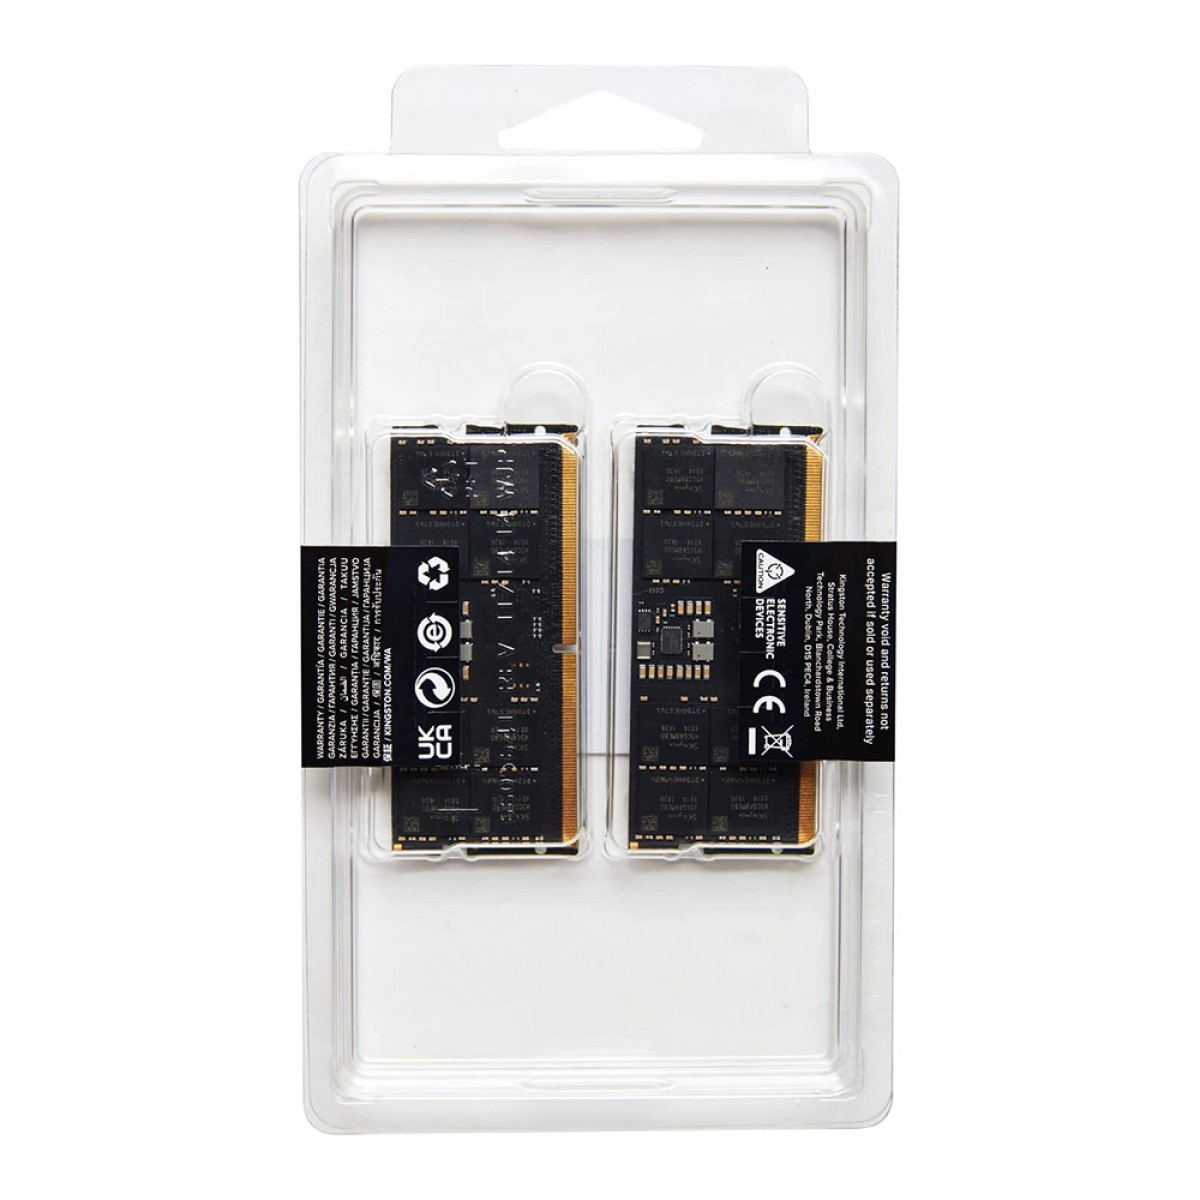 Memória Para Notebook DDR5 Kingston Fury Impact, 64GB (2x32GB), 4800MHz, CL38, Black, KF548S38IBK2-64